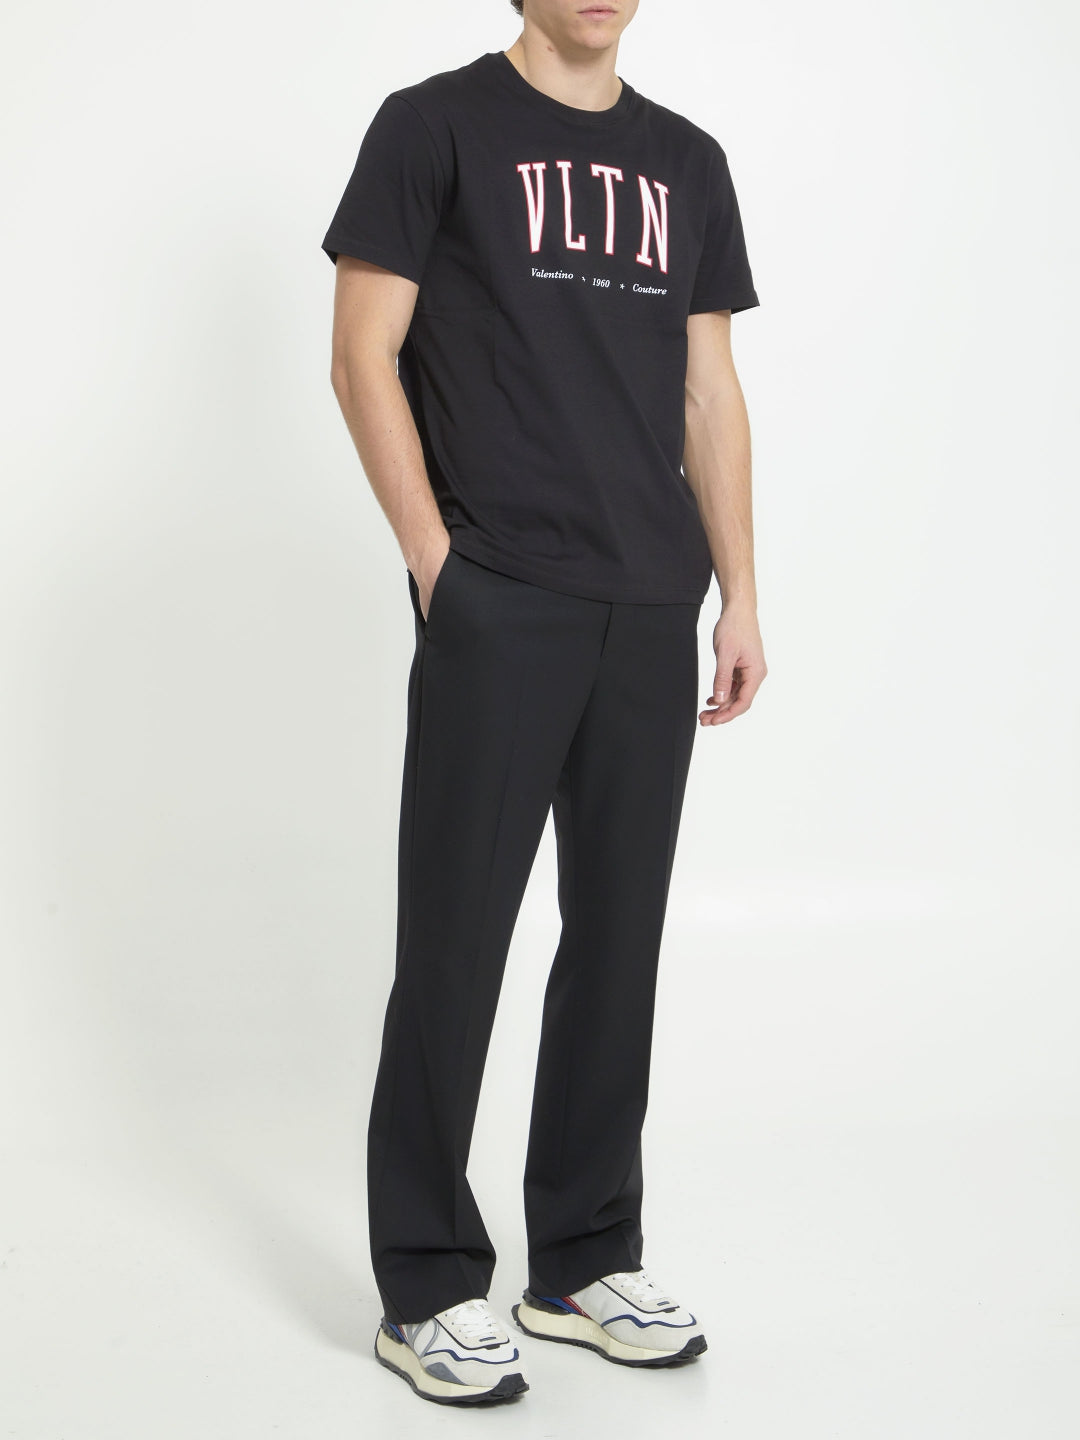 Valentino Garavani Men's Black Red Outline Short Sleeve Crew Neck T-Shirt